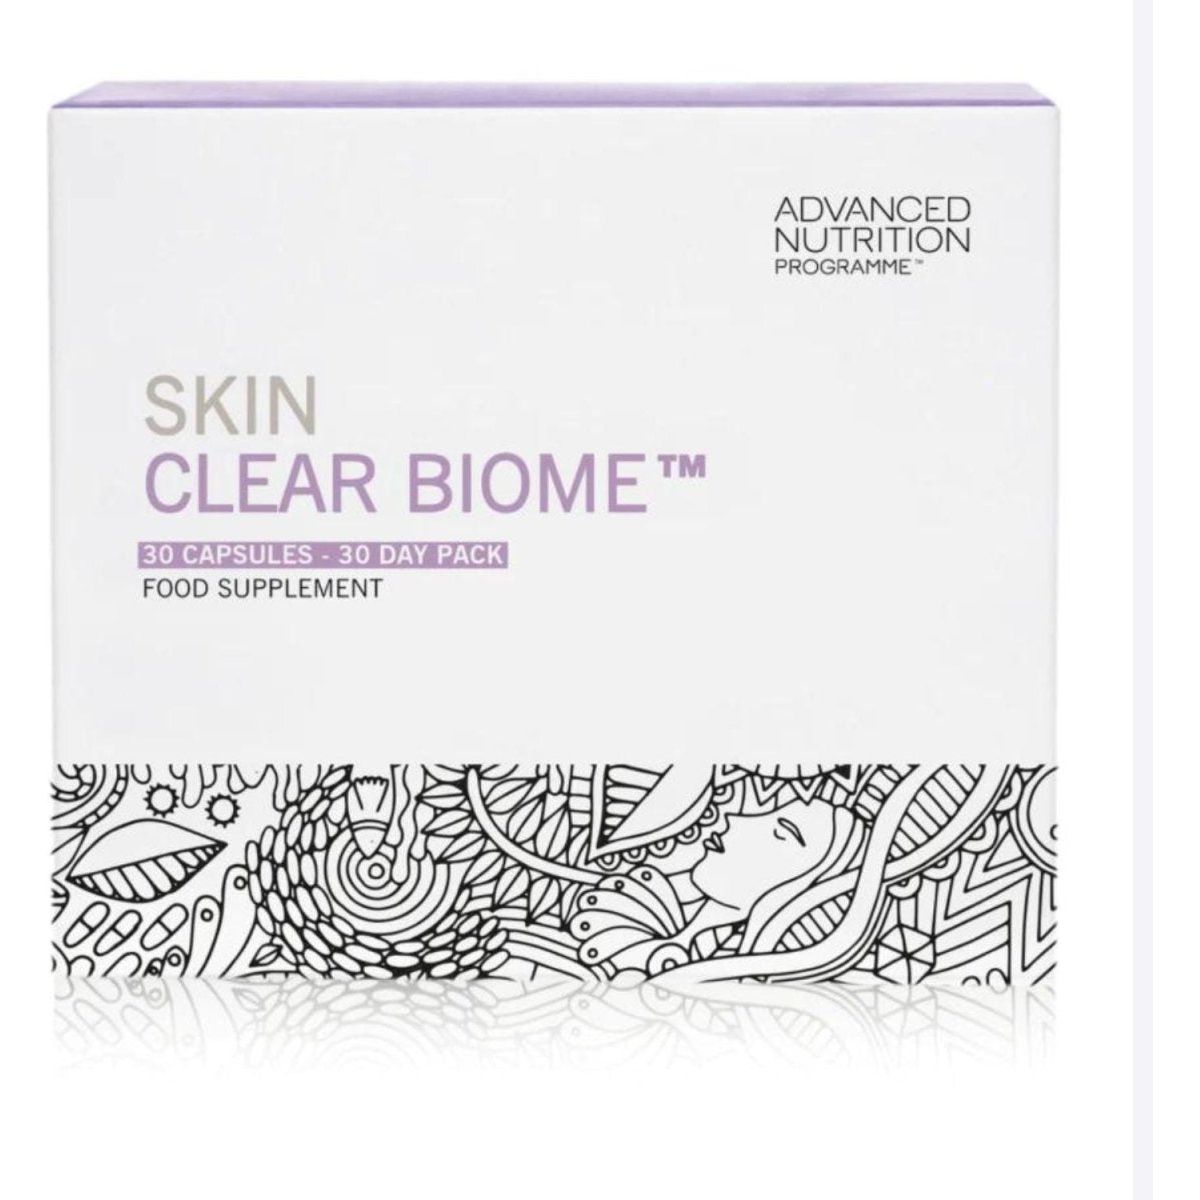 Advanced Nutrition Programme | Skin Clear Biome | 30 caps - DG International Ventures Limited